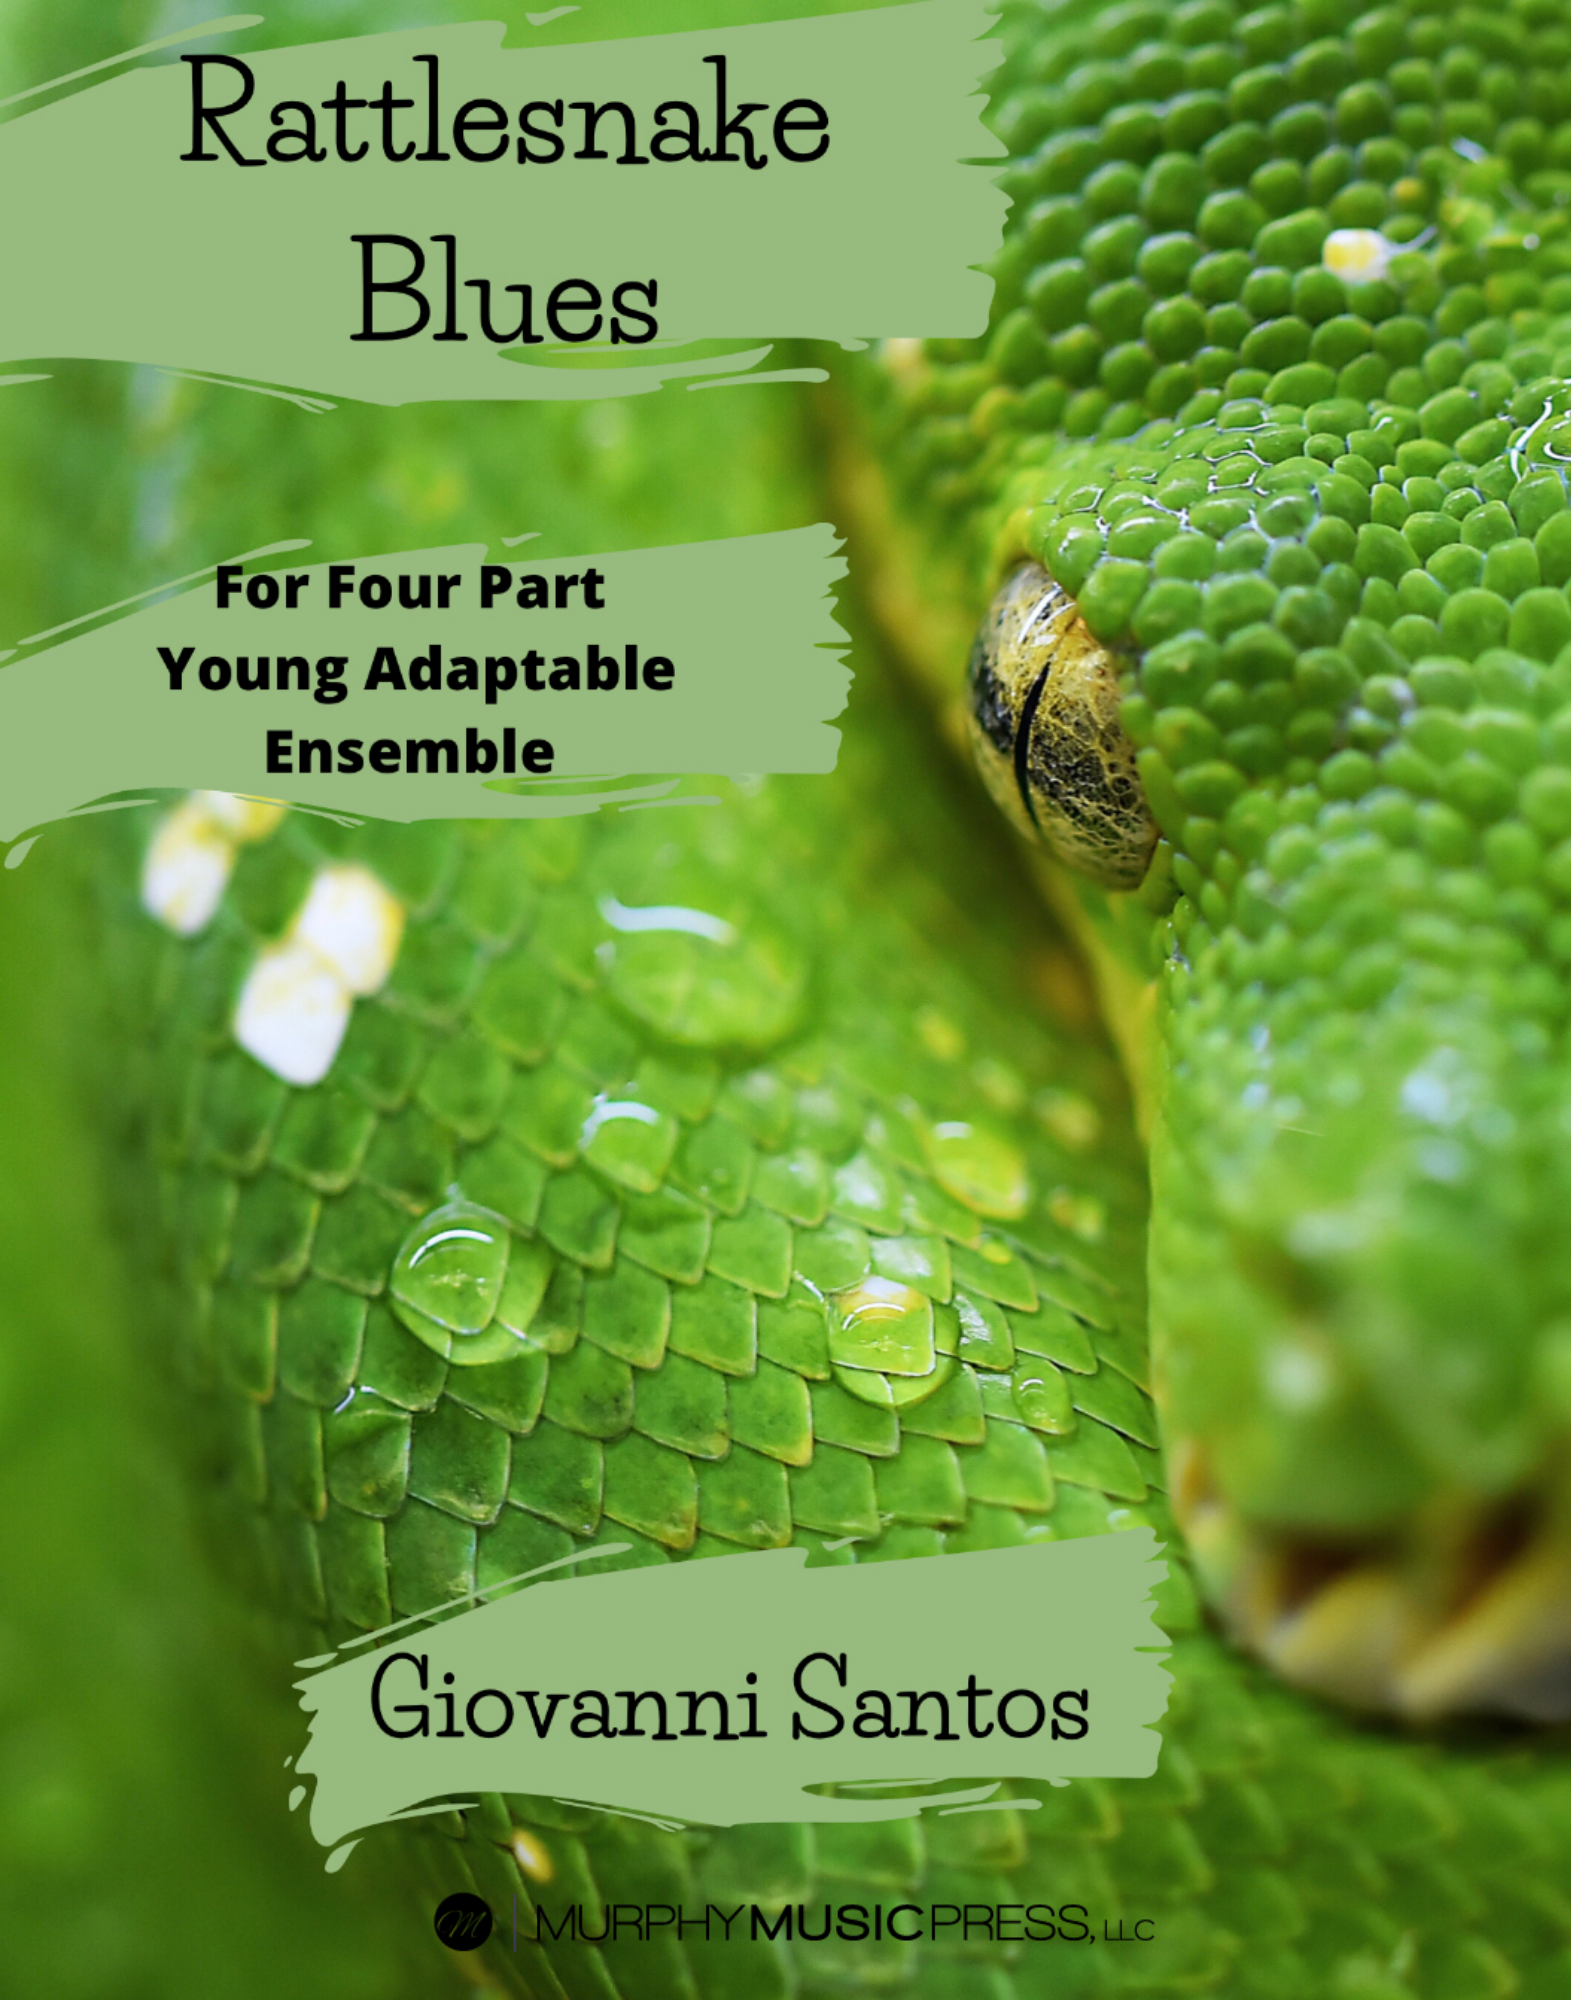 Rattlesnake Blues  by Giovanni Santos